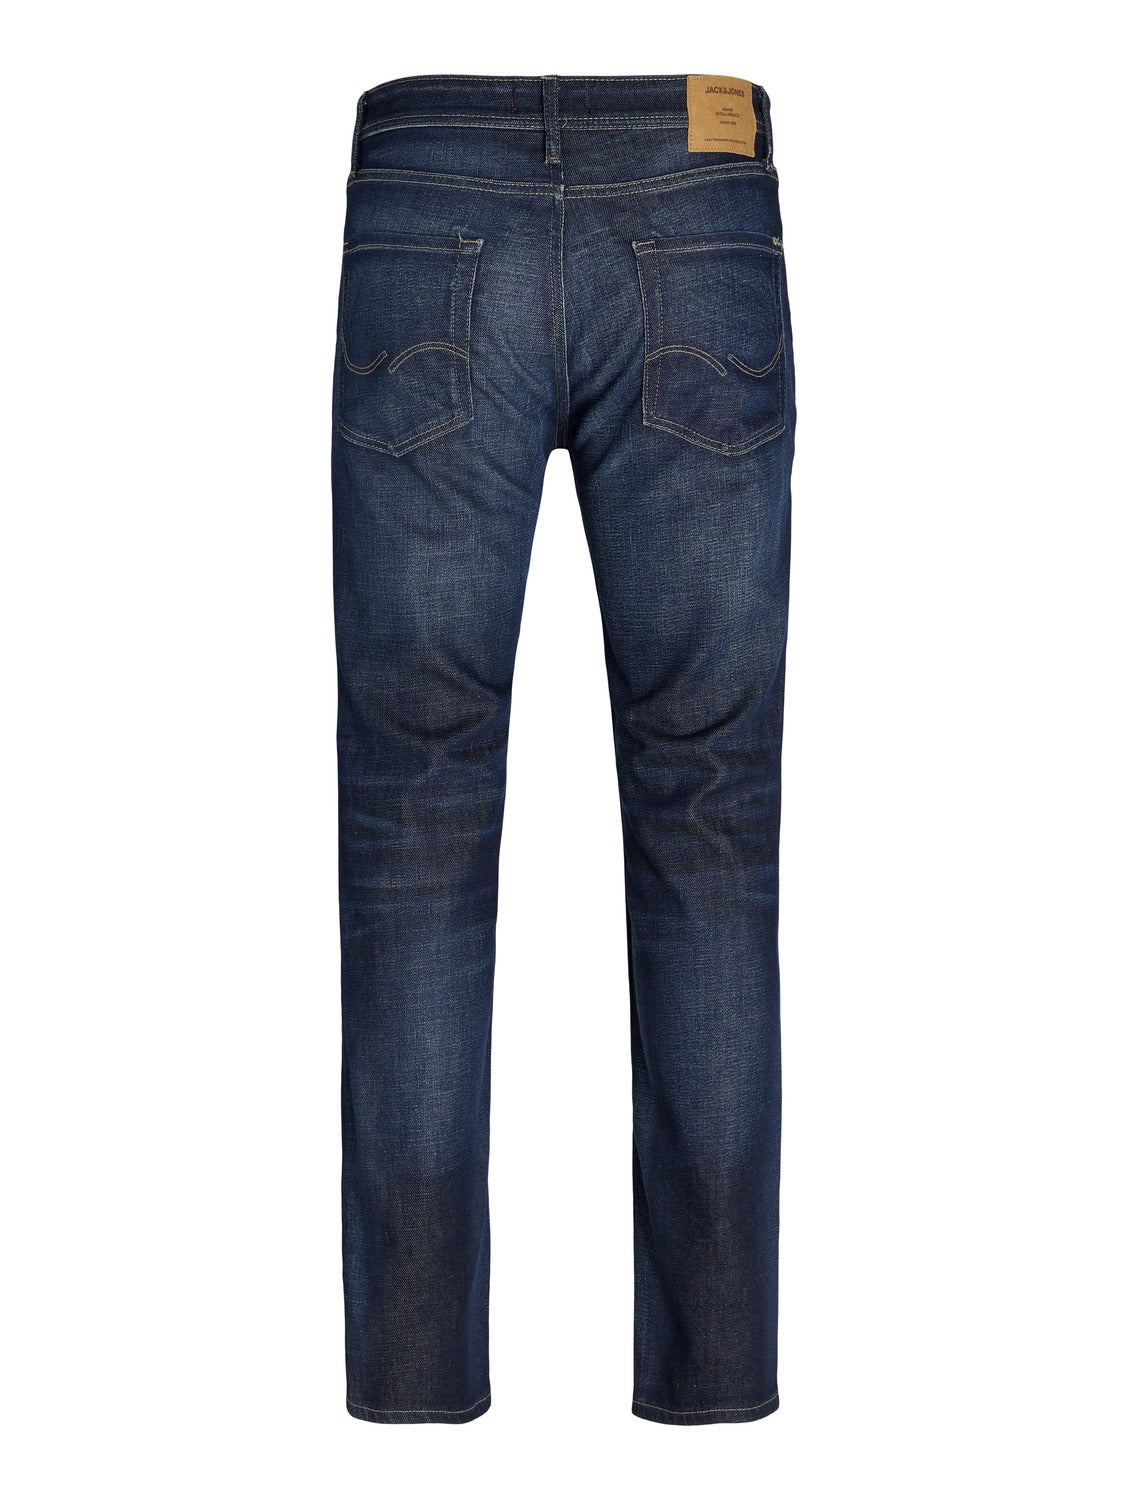 JJICLARK JJORIGINAL JOS 318 Regular fit jeans with 50% discount 